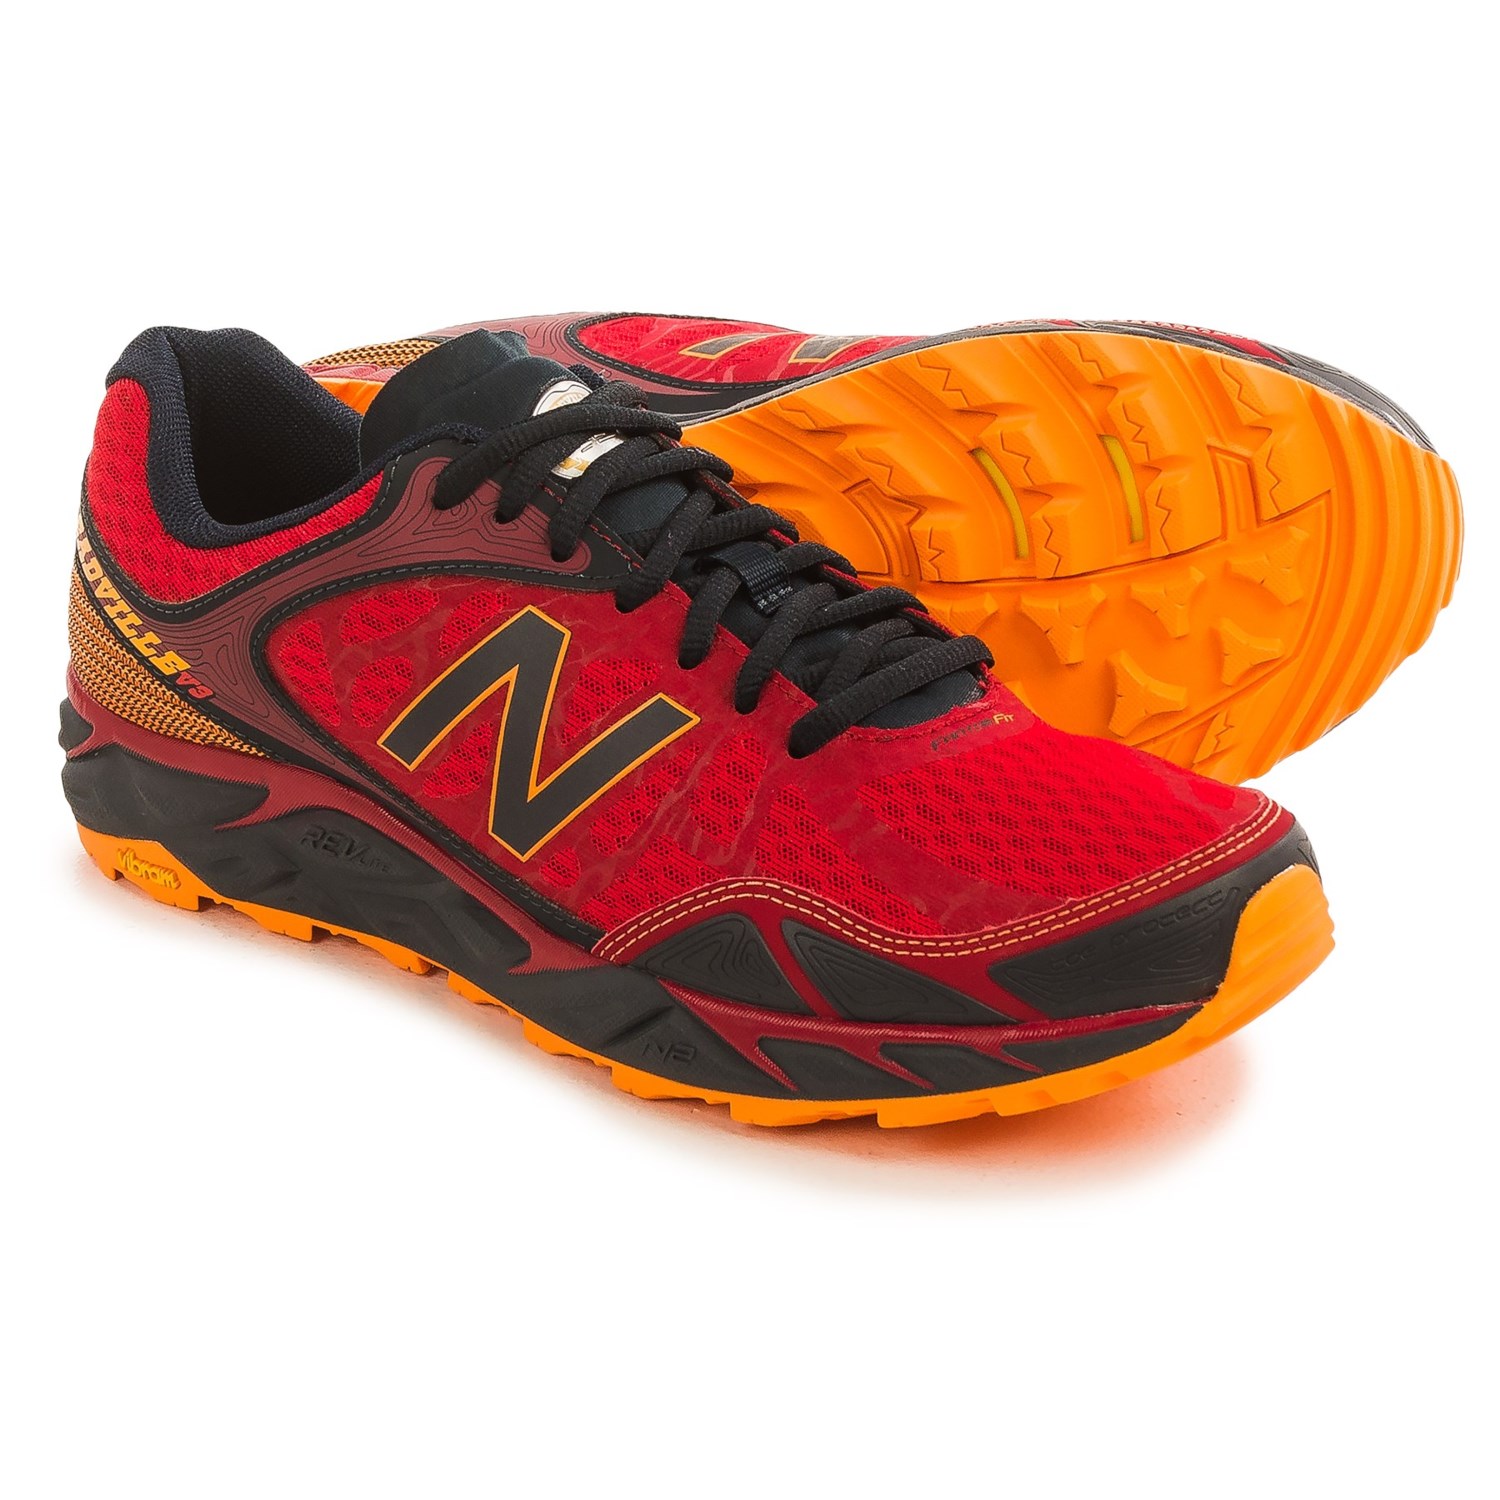 New Balance Leadville V3 Trail Running Shoes (For Men) - Save 51%